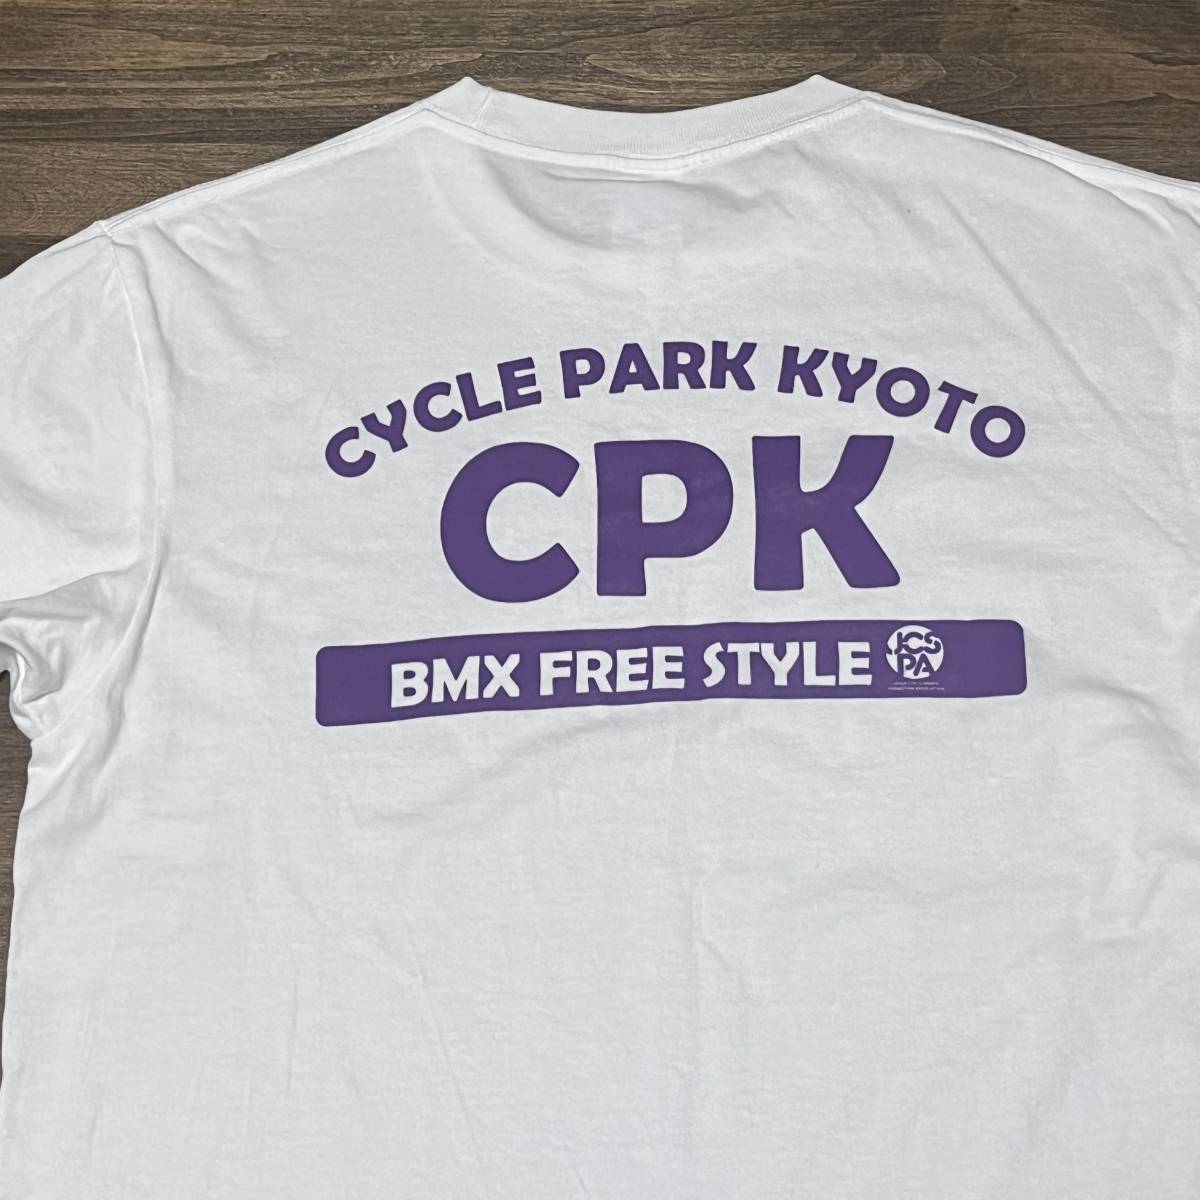  велогонки flat дешево . Kyoto Mukou блок велогонки место cycle park Kyoto BMX Freestyle футболка 